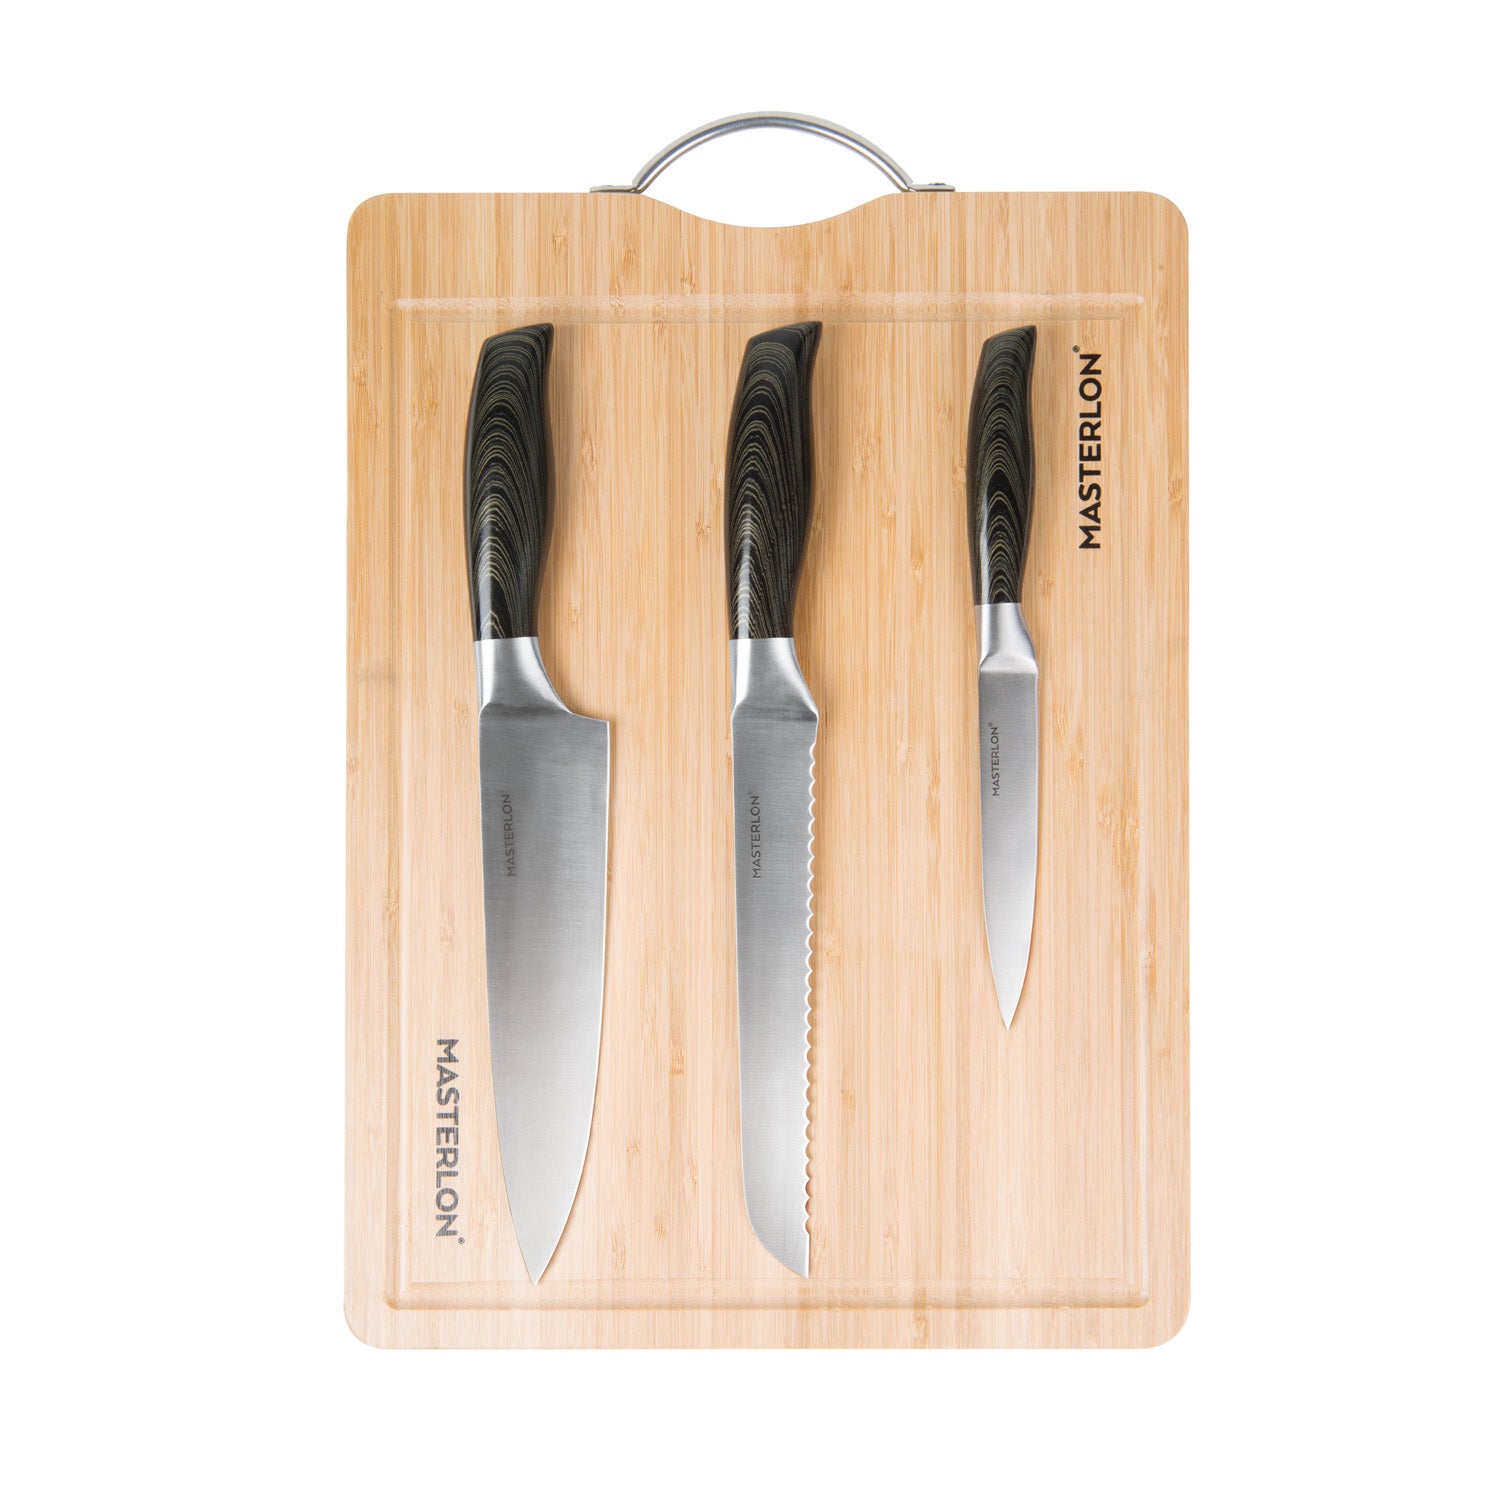 Knife set on wooden cutting board